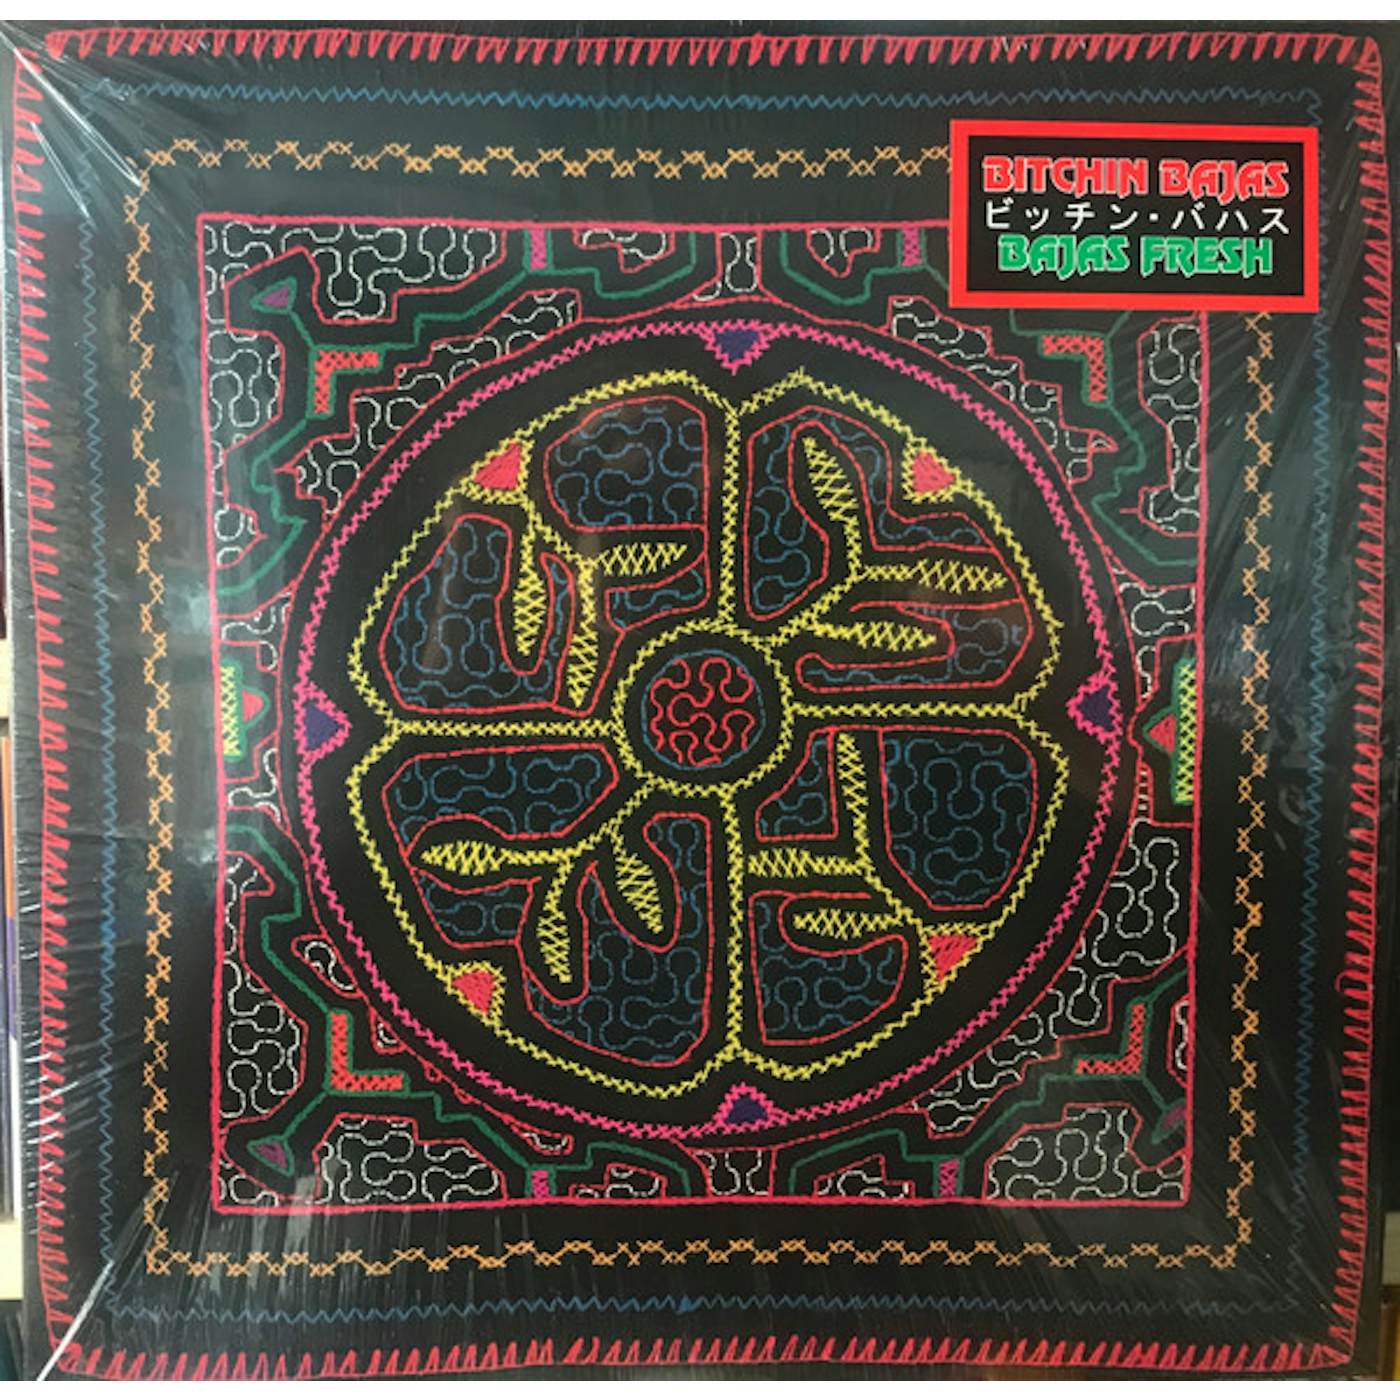 Bitchin Bajas FRESH Vinyl Record